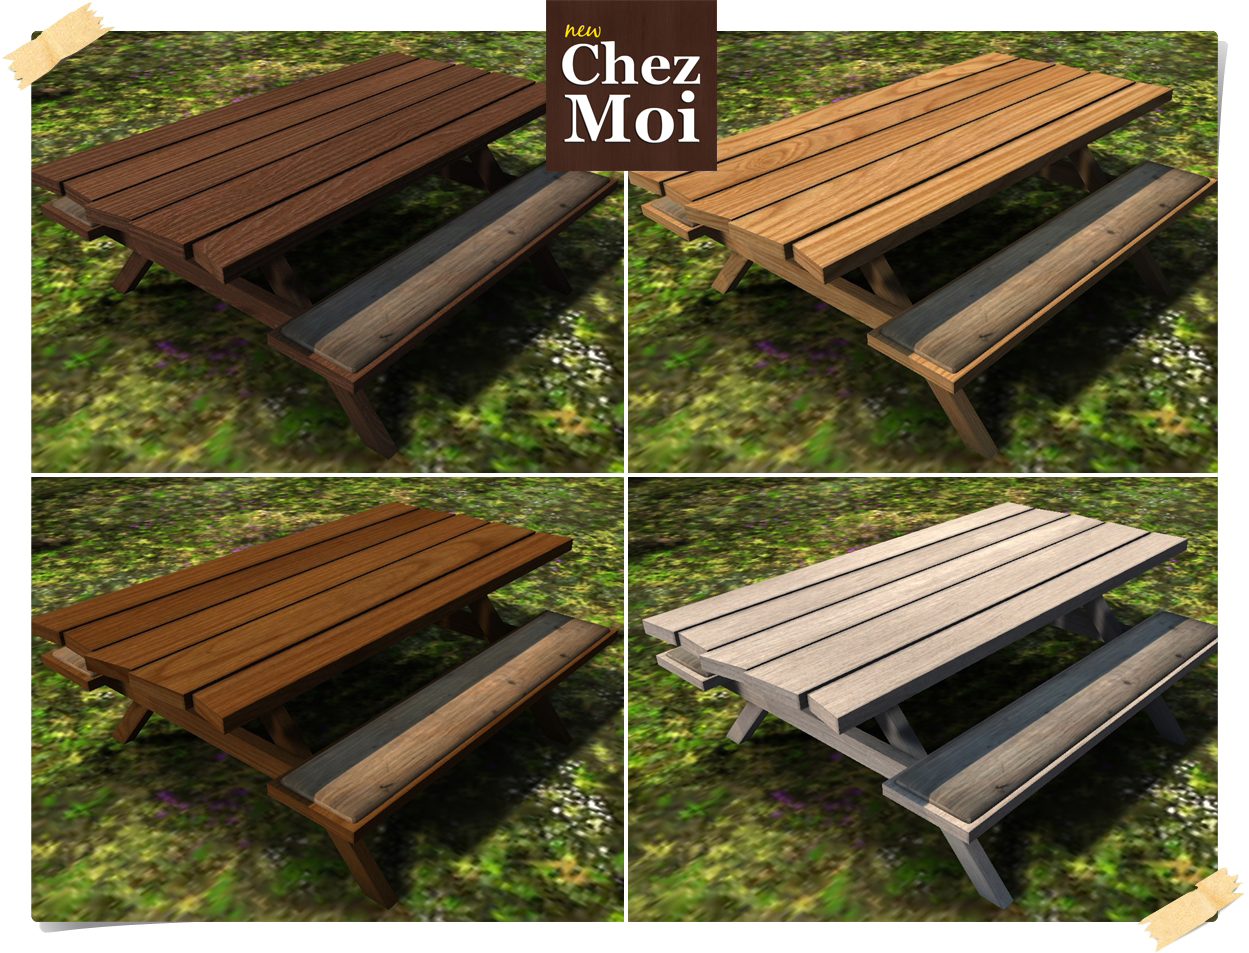 wood picnic table